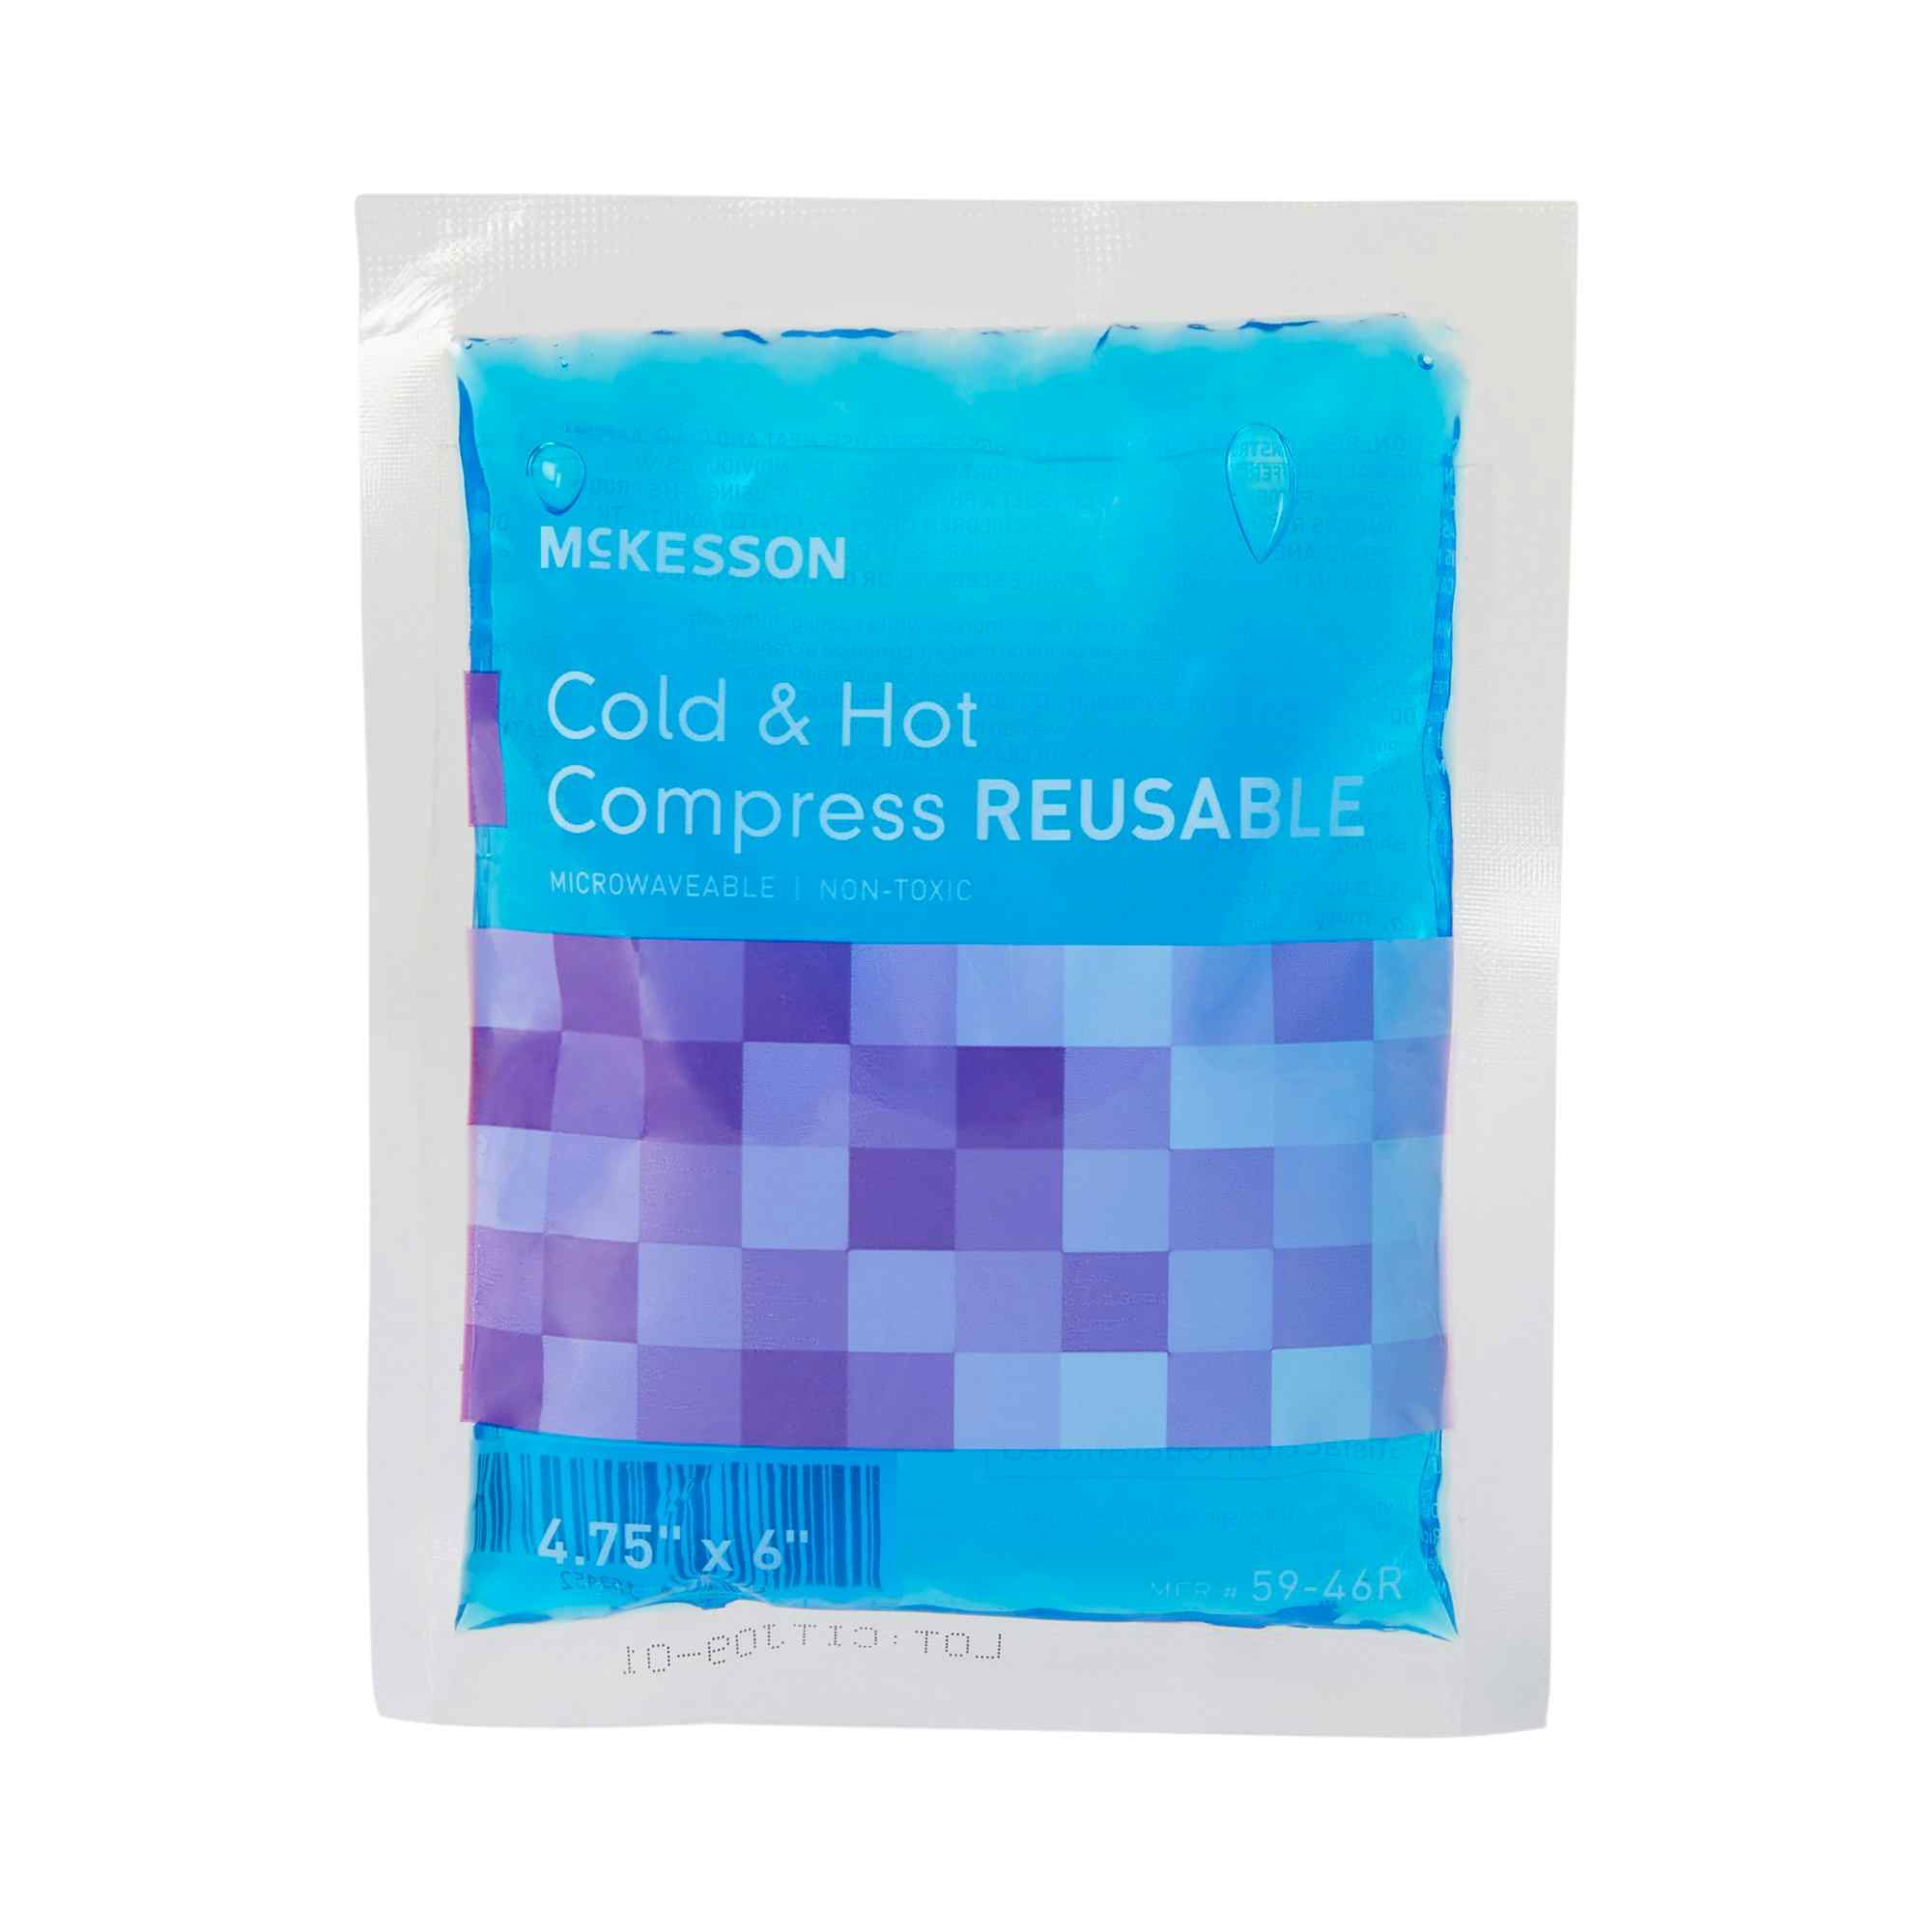 McKesson Cold & Hot Reusable Compress